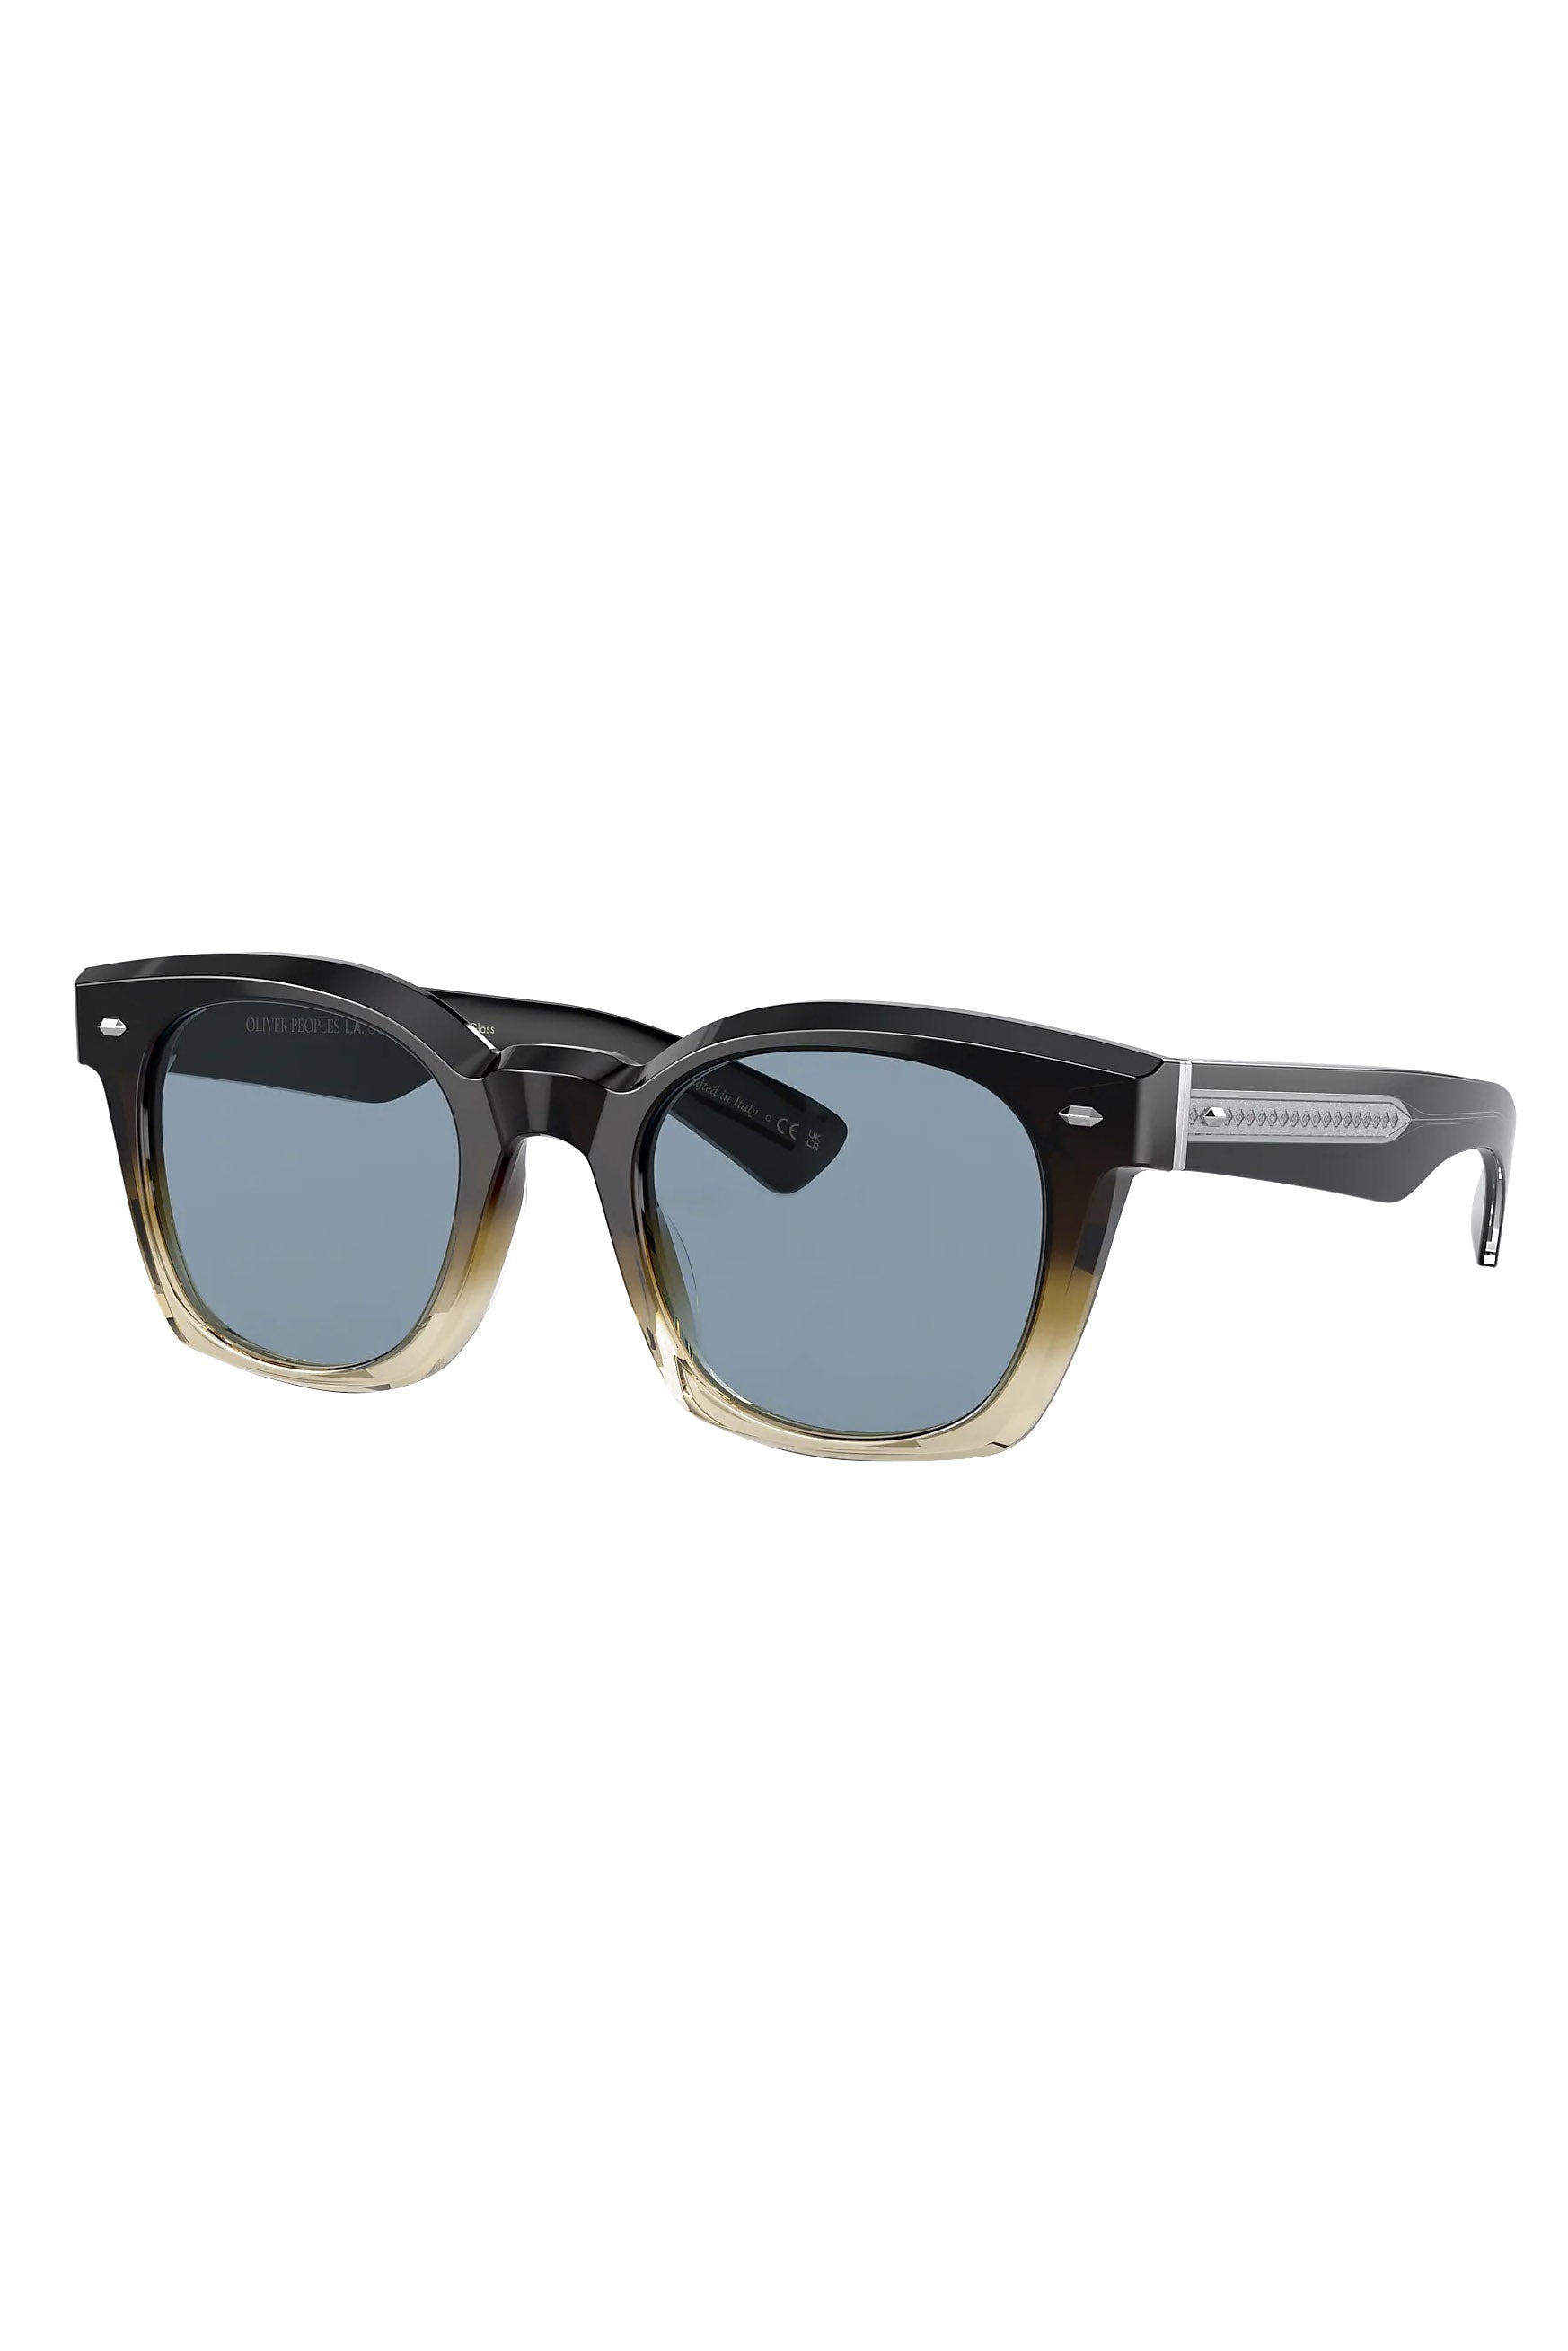 OLIVER PEOPLES-Merceaux Sunglasses - Cobalt-COBALTO